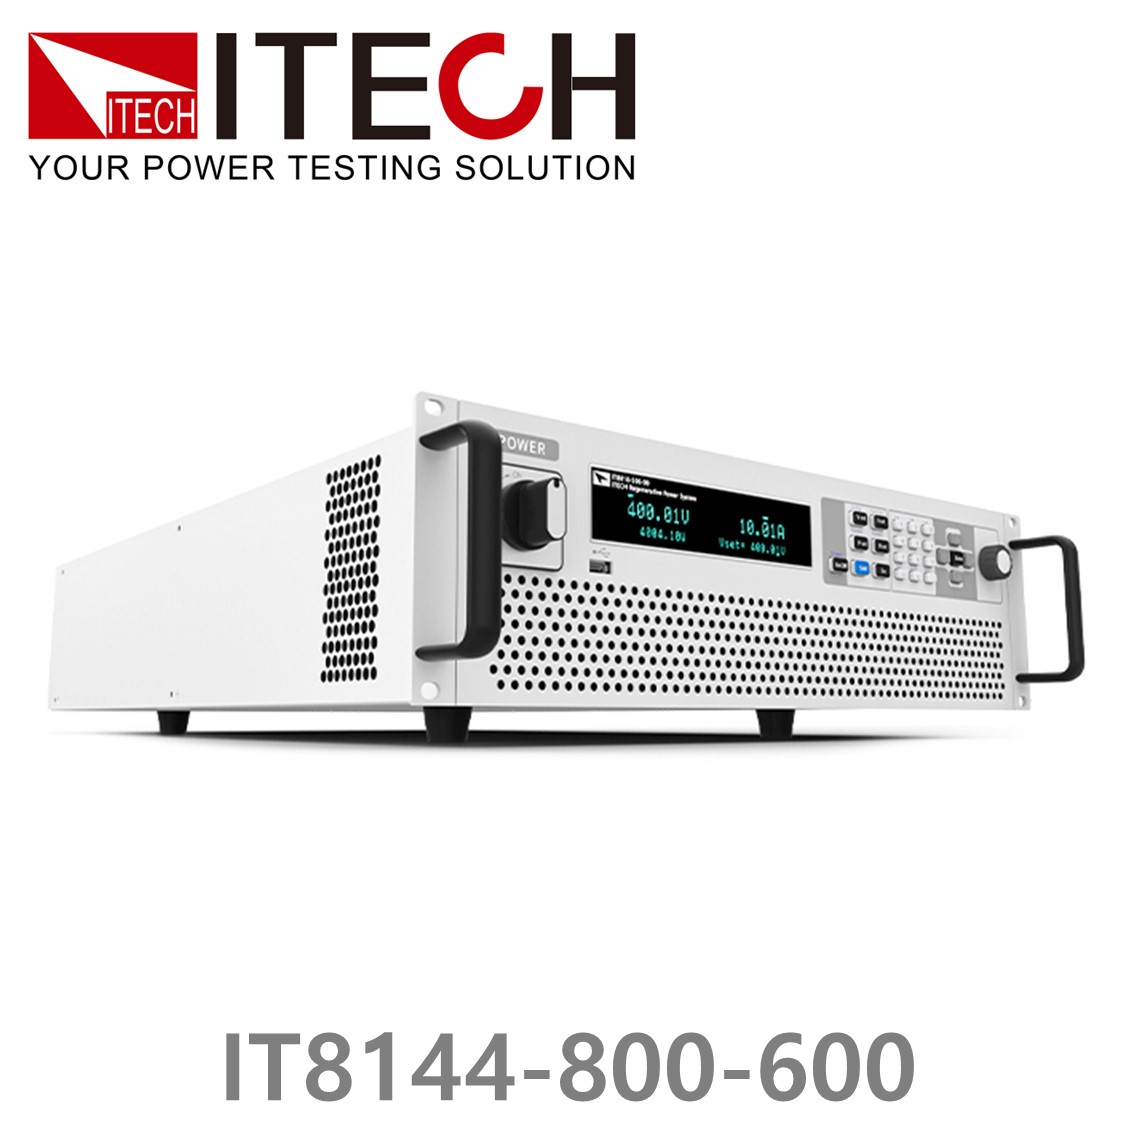 [ ITECH ] IT8144-800-600  회생형 DC전자로드, DC전자부하 800V/600A/144kW (27U)